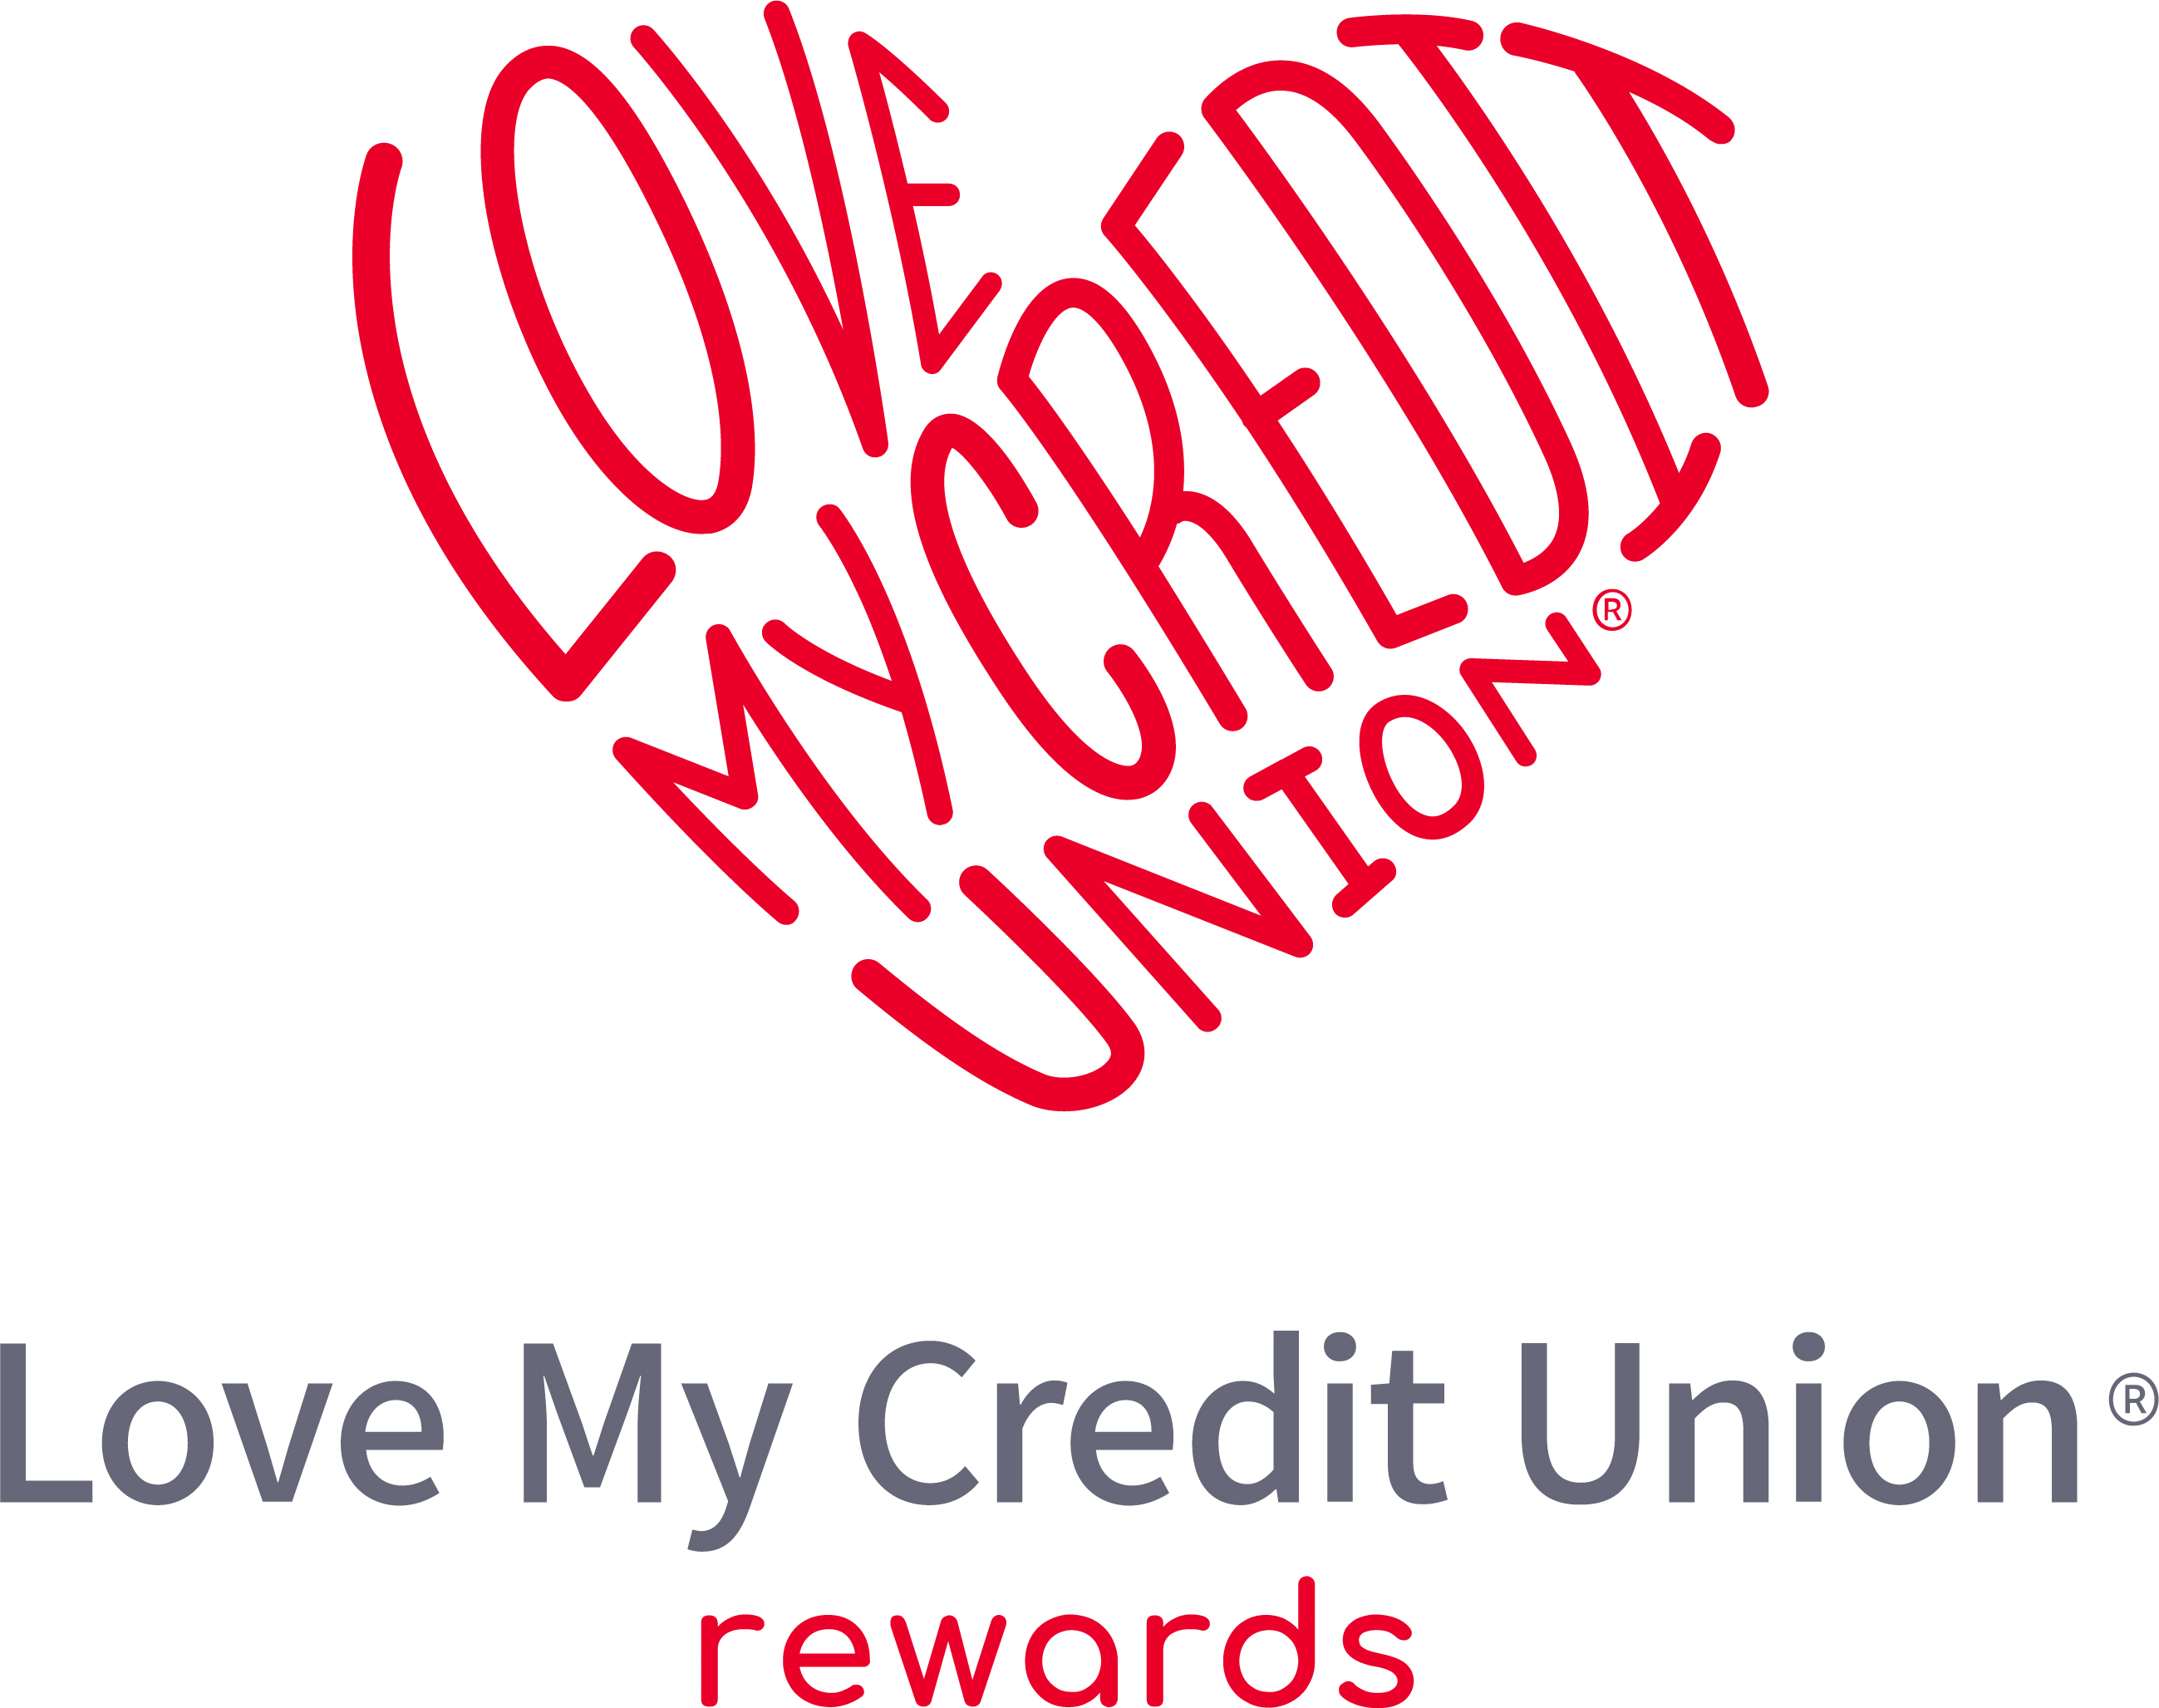 Лове кредит. Credit Union. Reward logo.